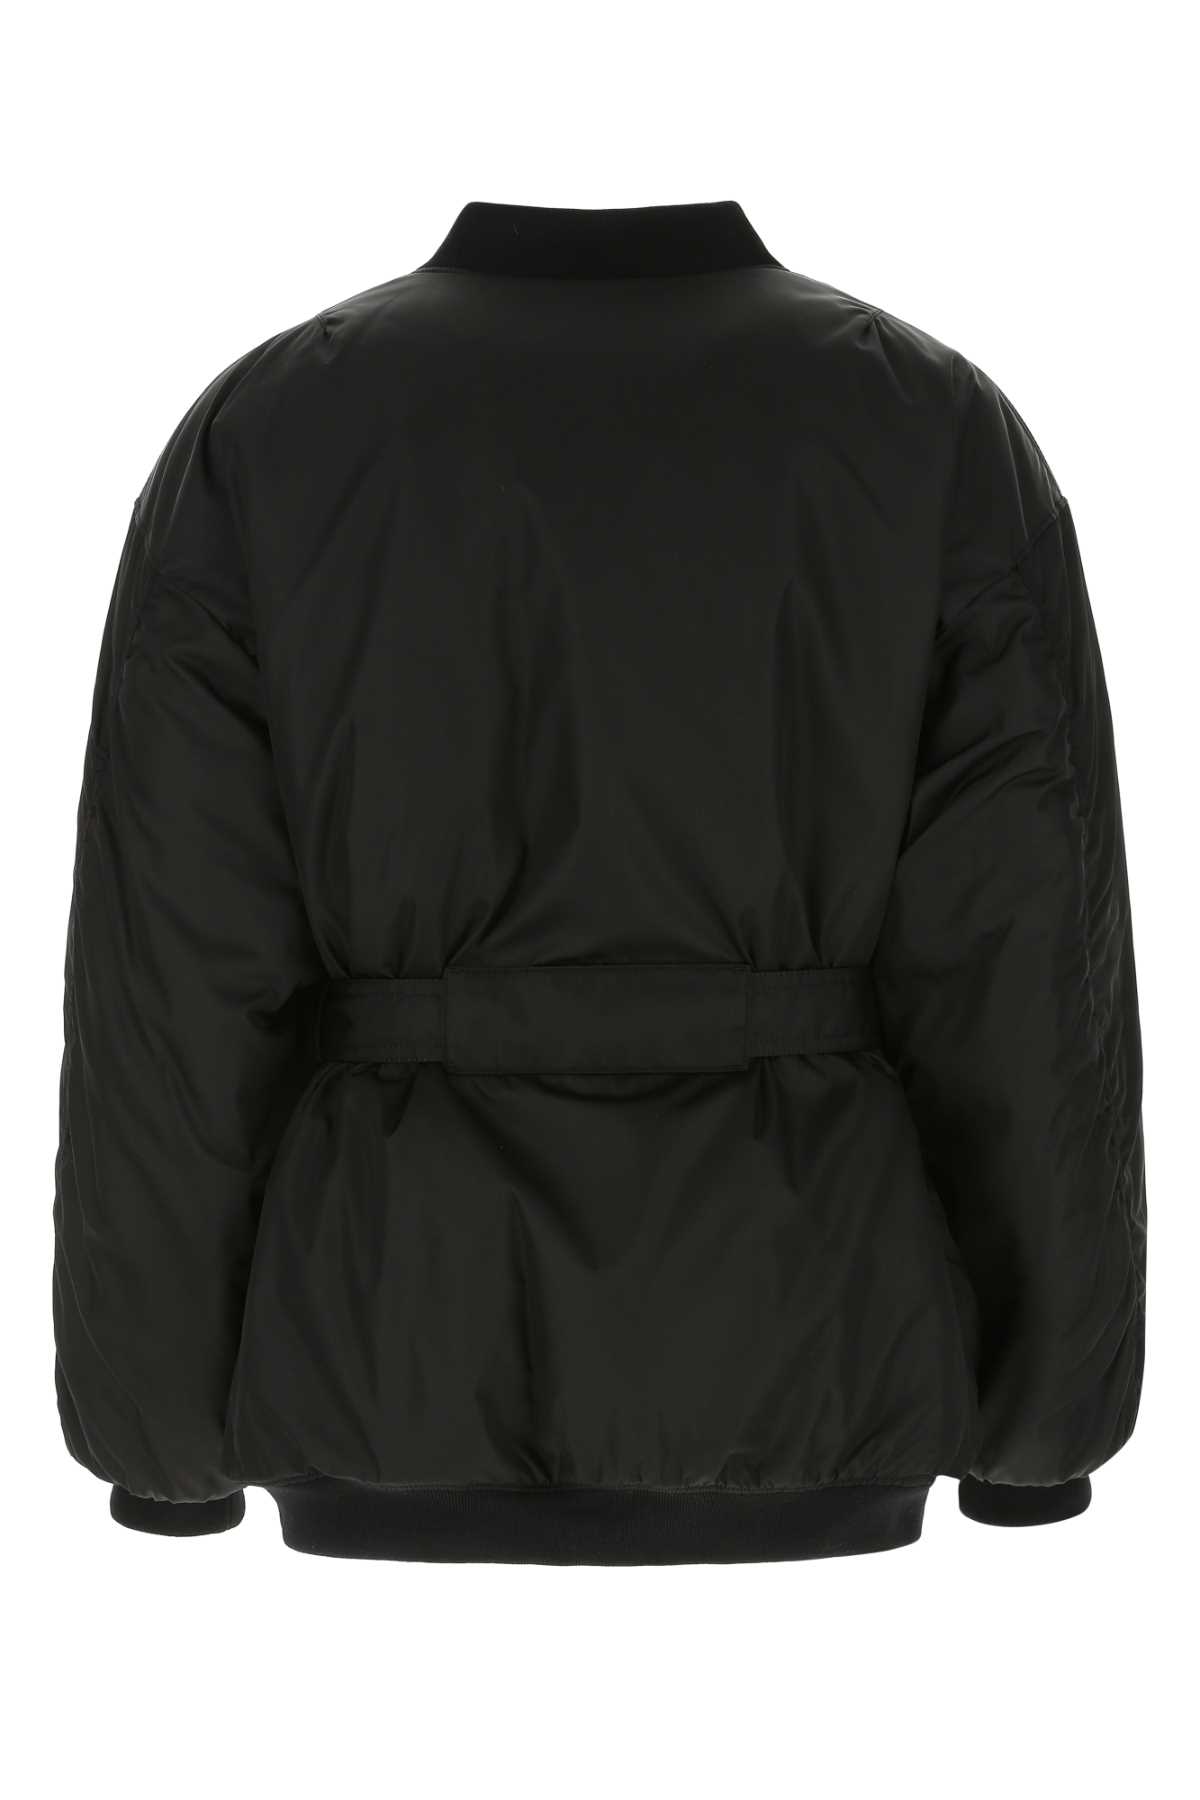 Prada Black Re-nylon Padded Jacket In F0002